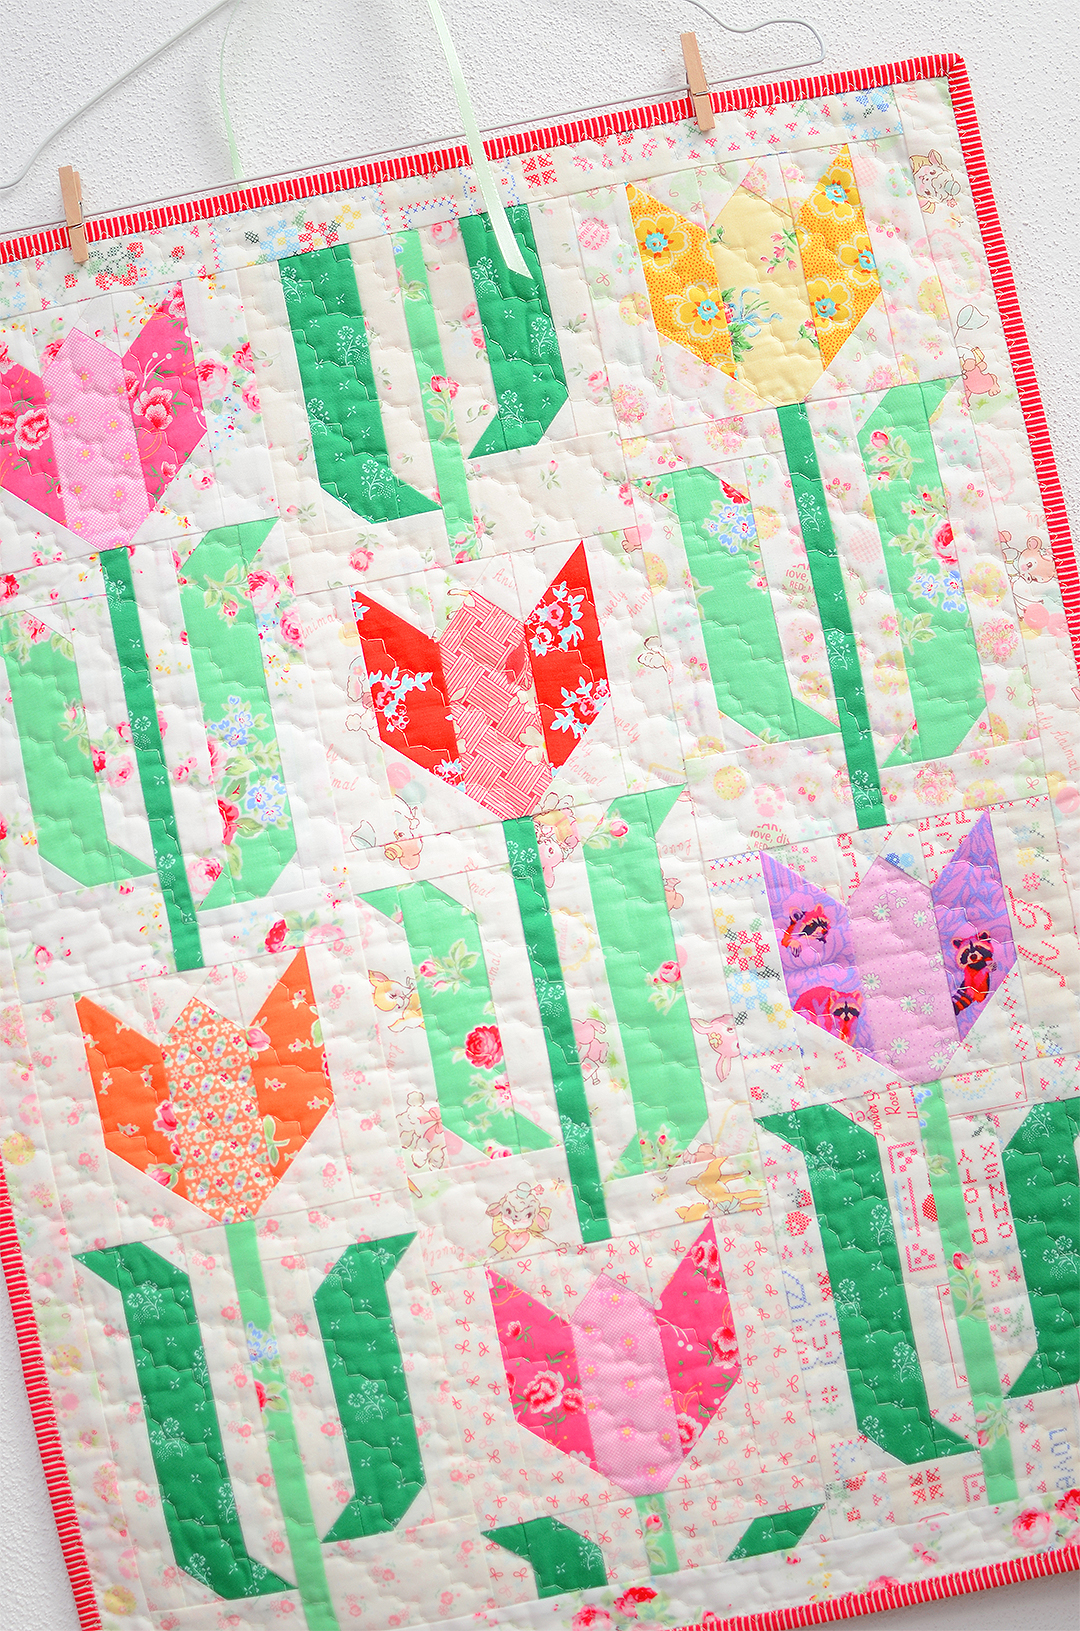 Tulip Mini Quilt - an easy quilt pattern by Nadra Ridgeway of ellis & higgs